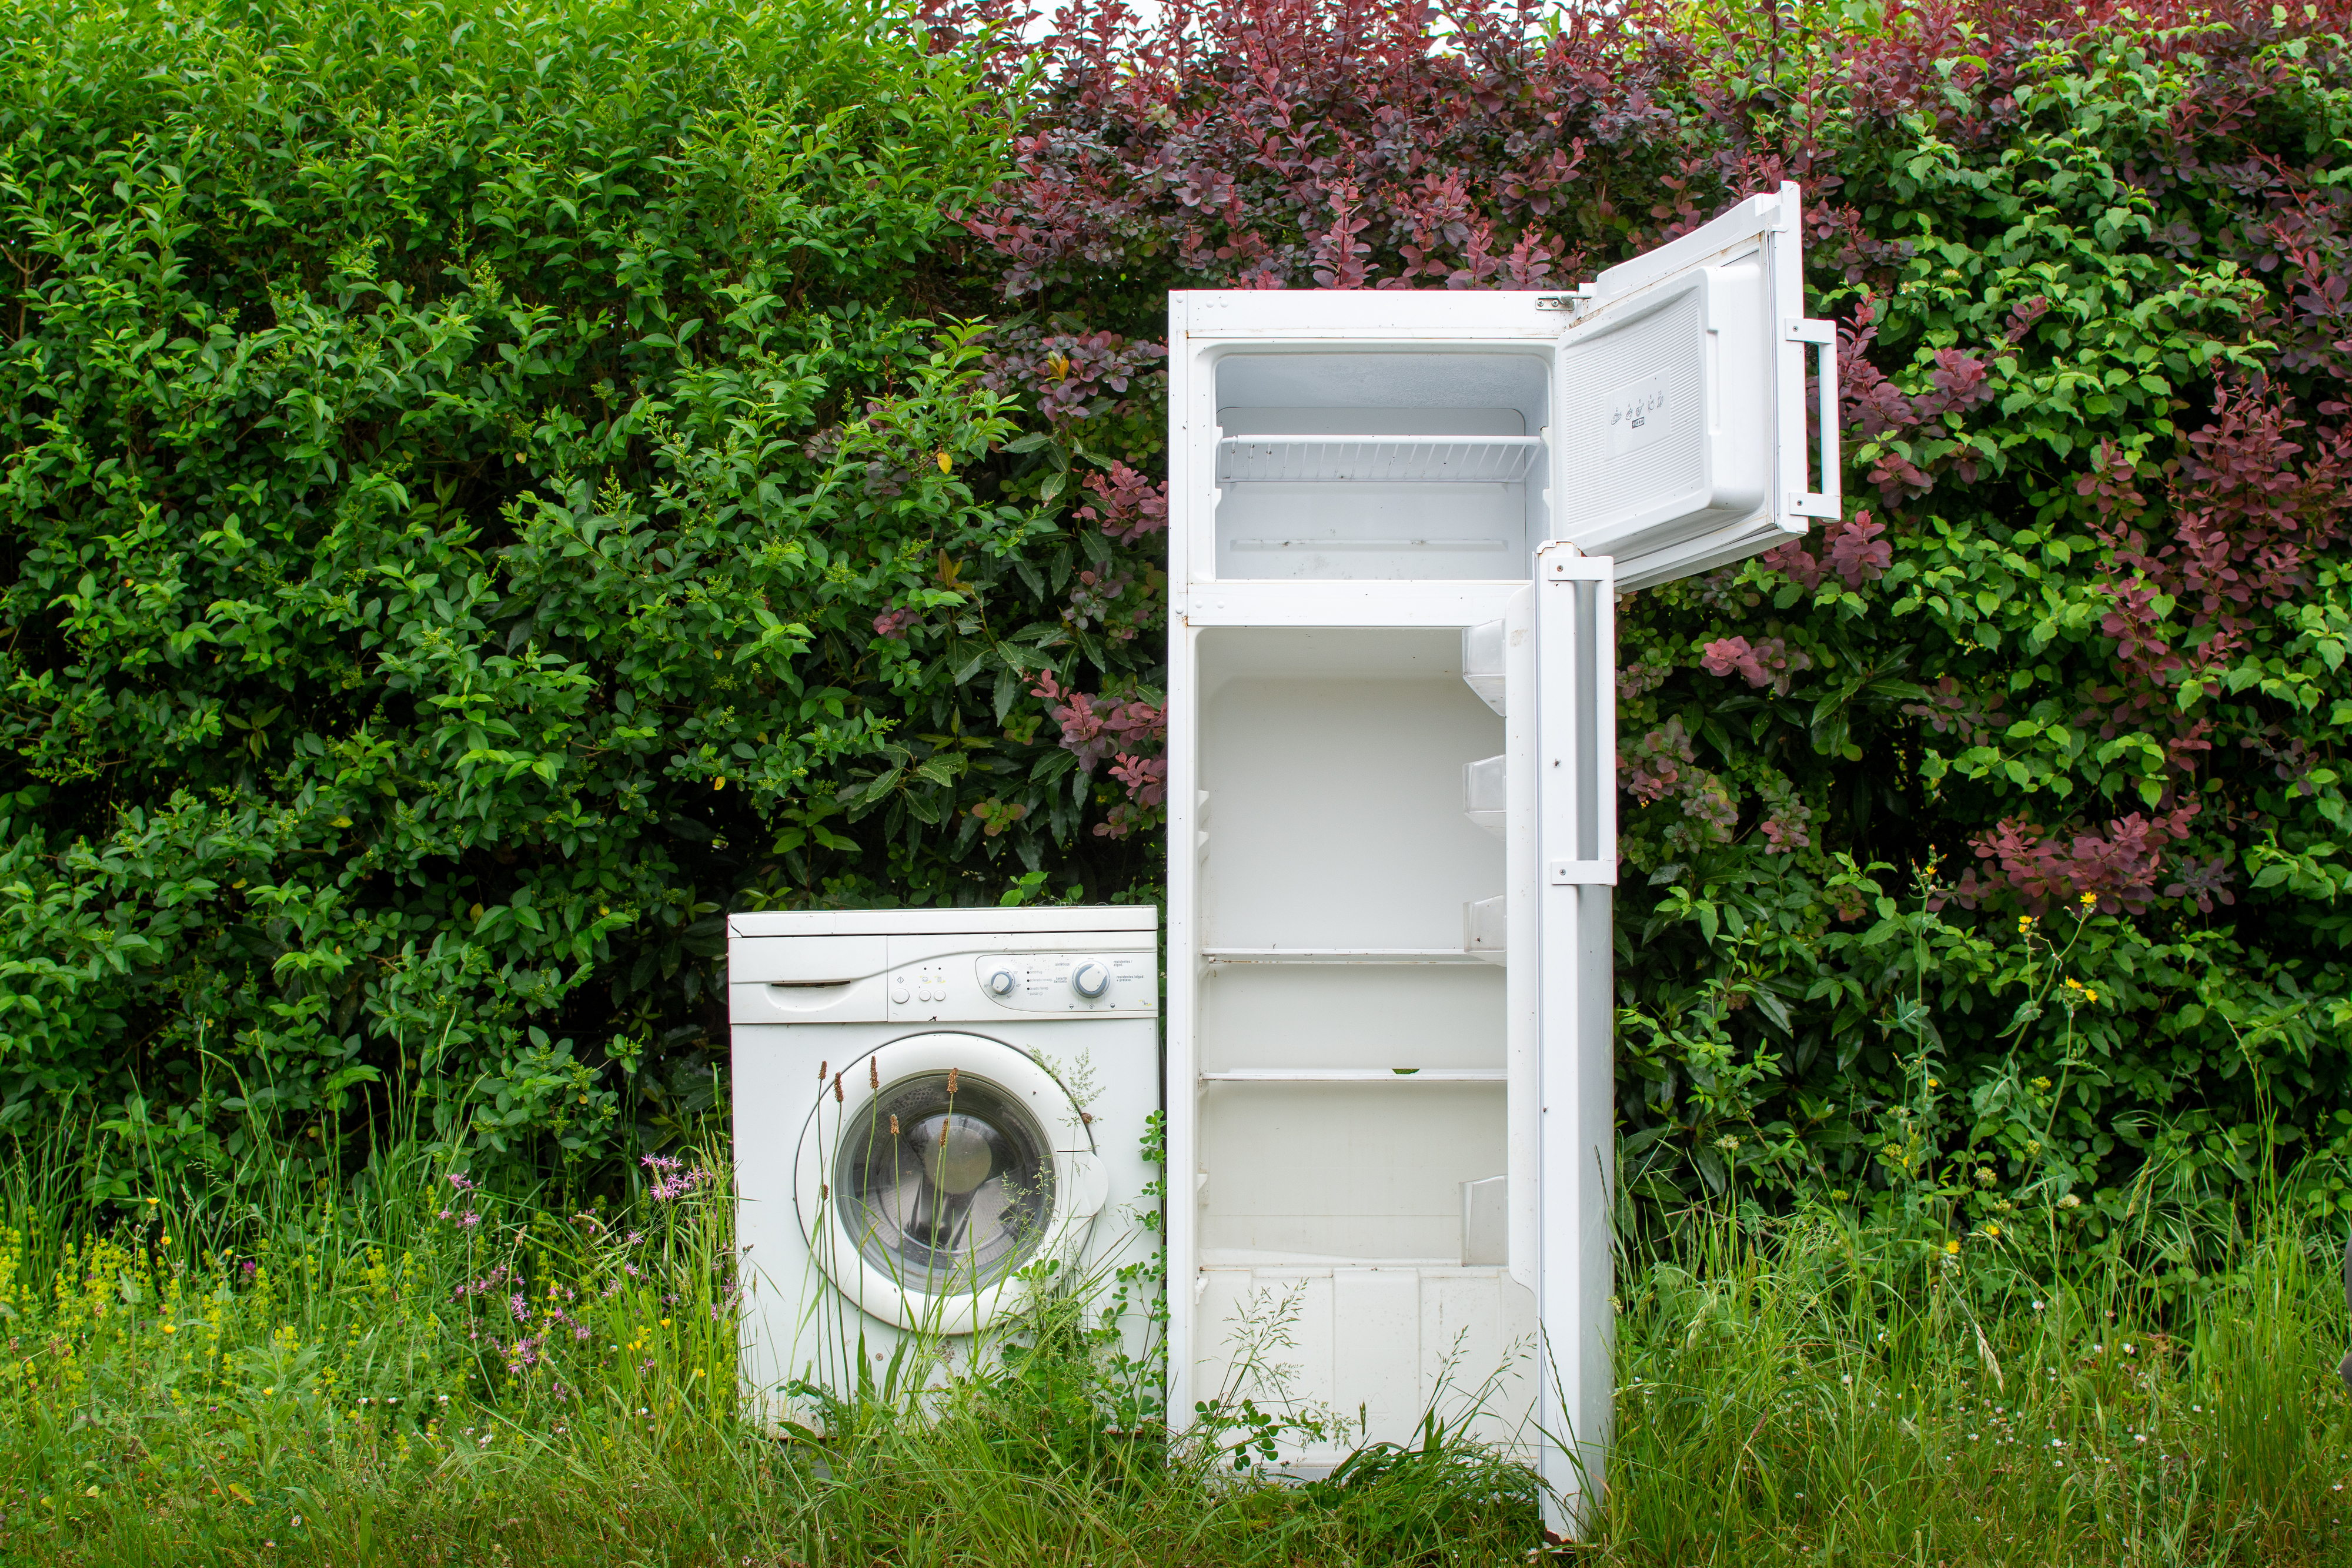 broken fridge and washing machine in a grass lot